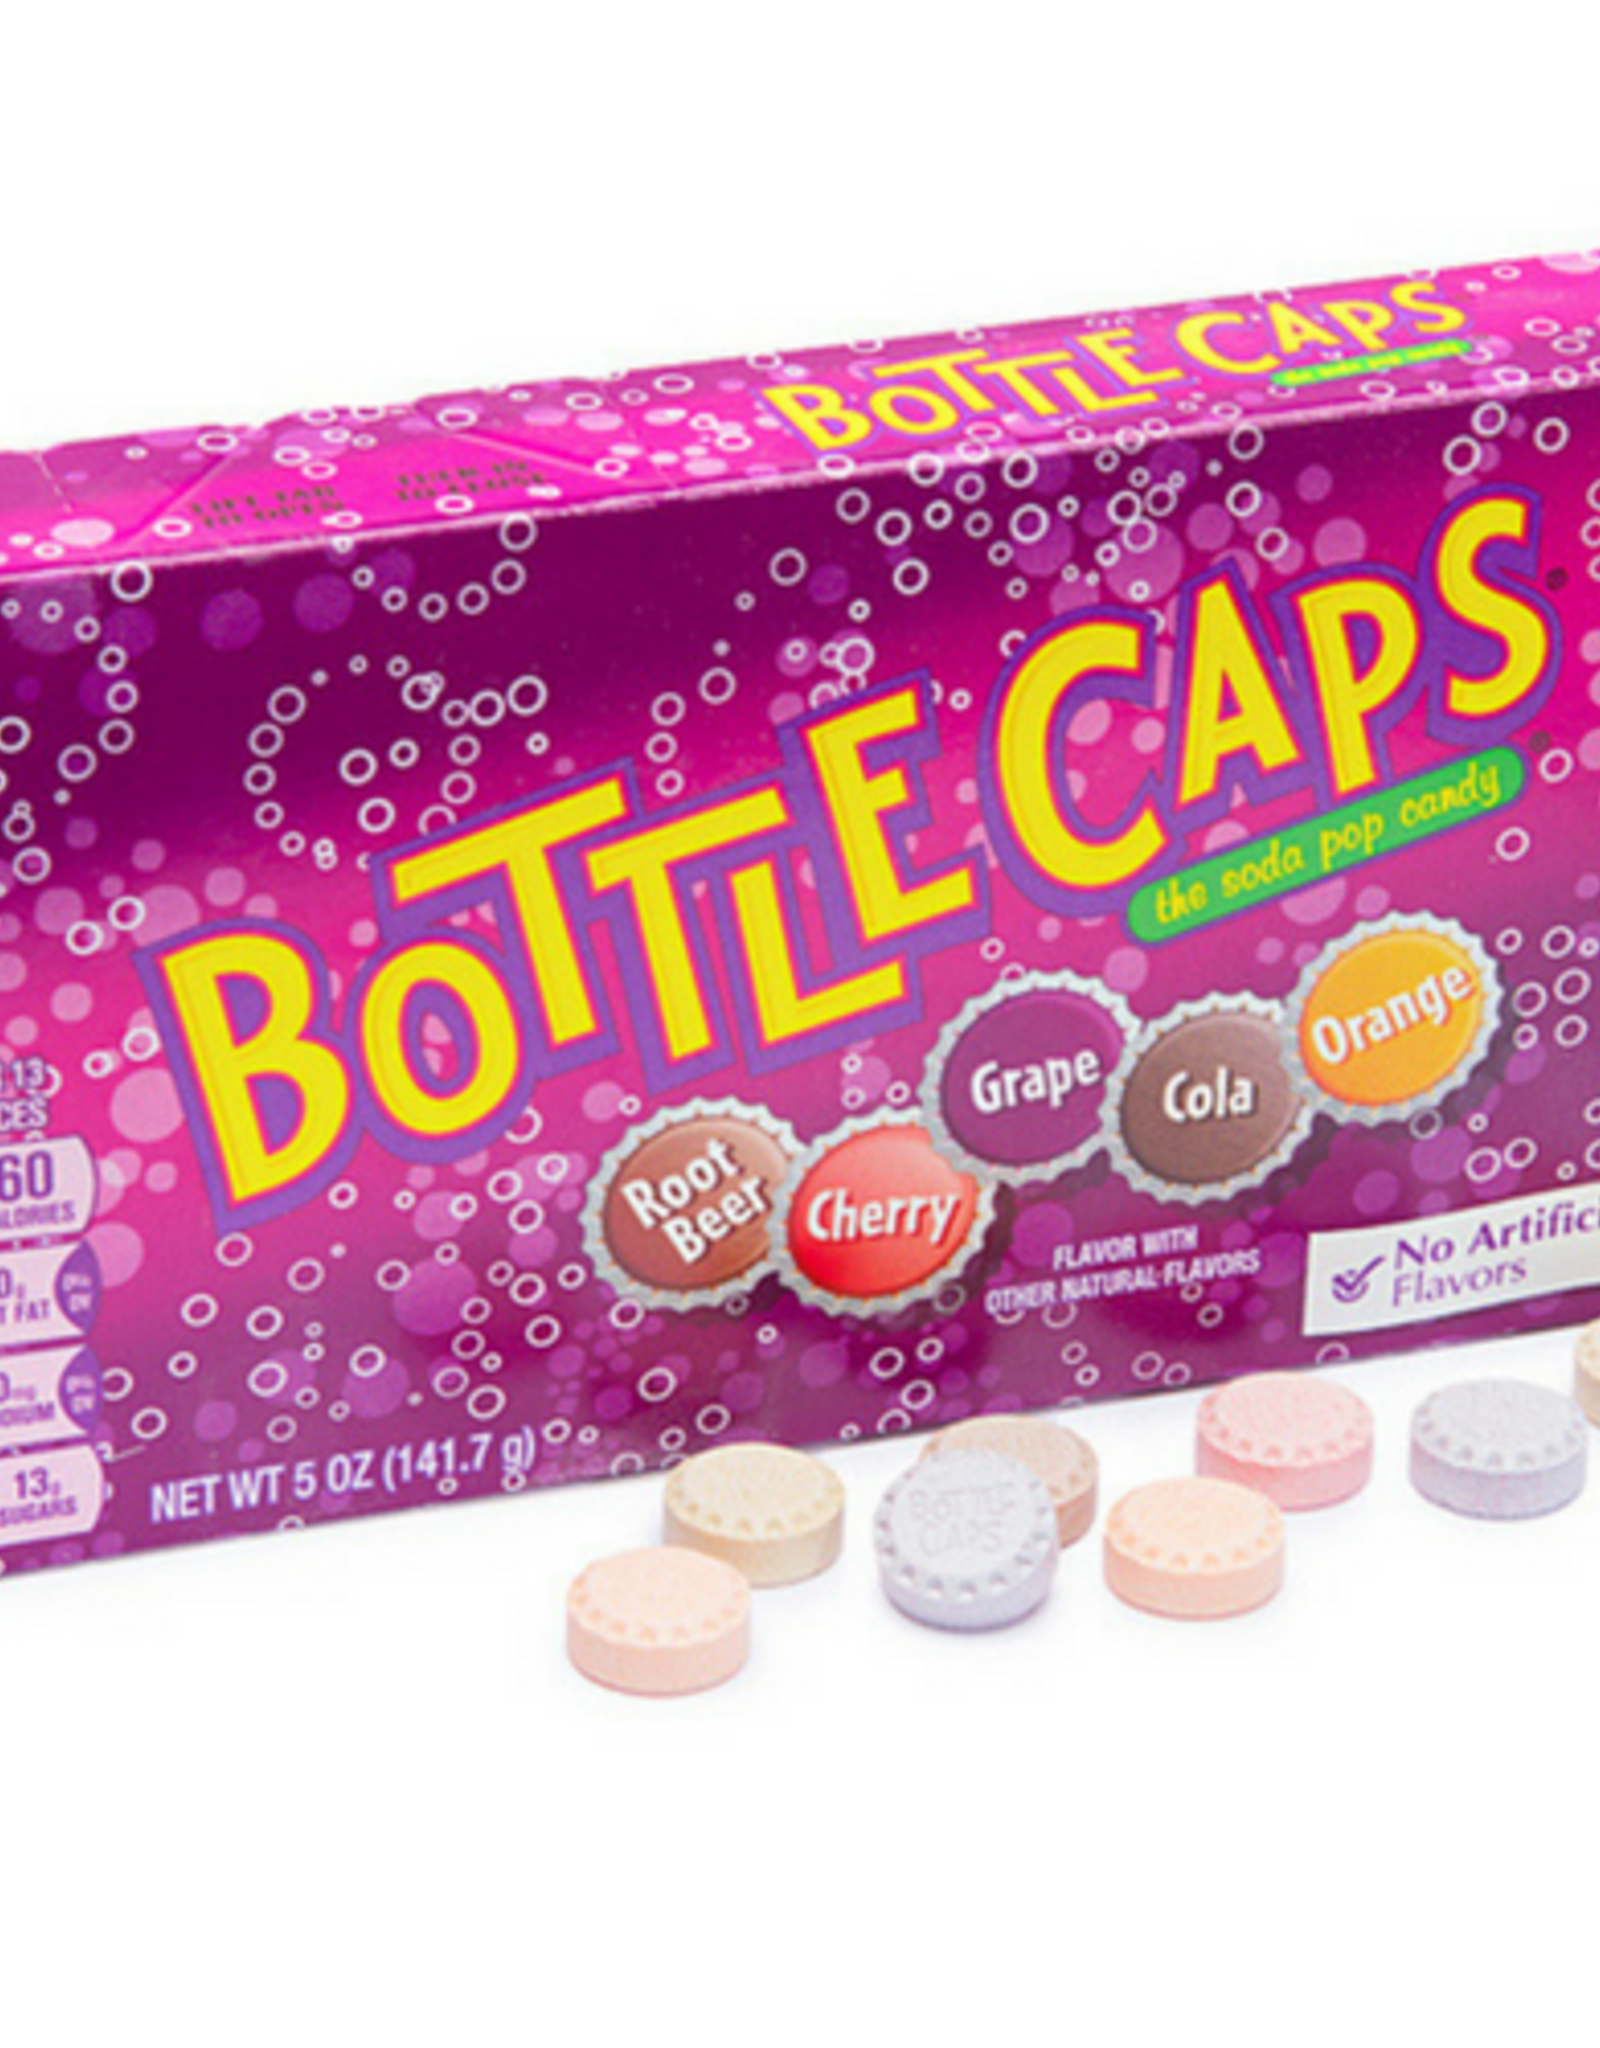 Black Cat Wonka Bottle Caps Theater Box